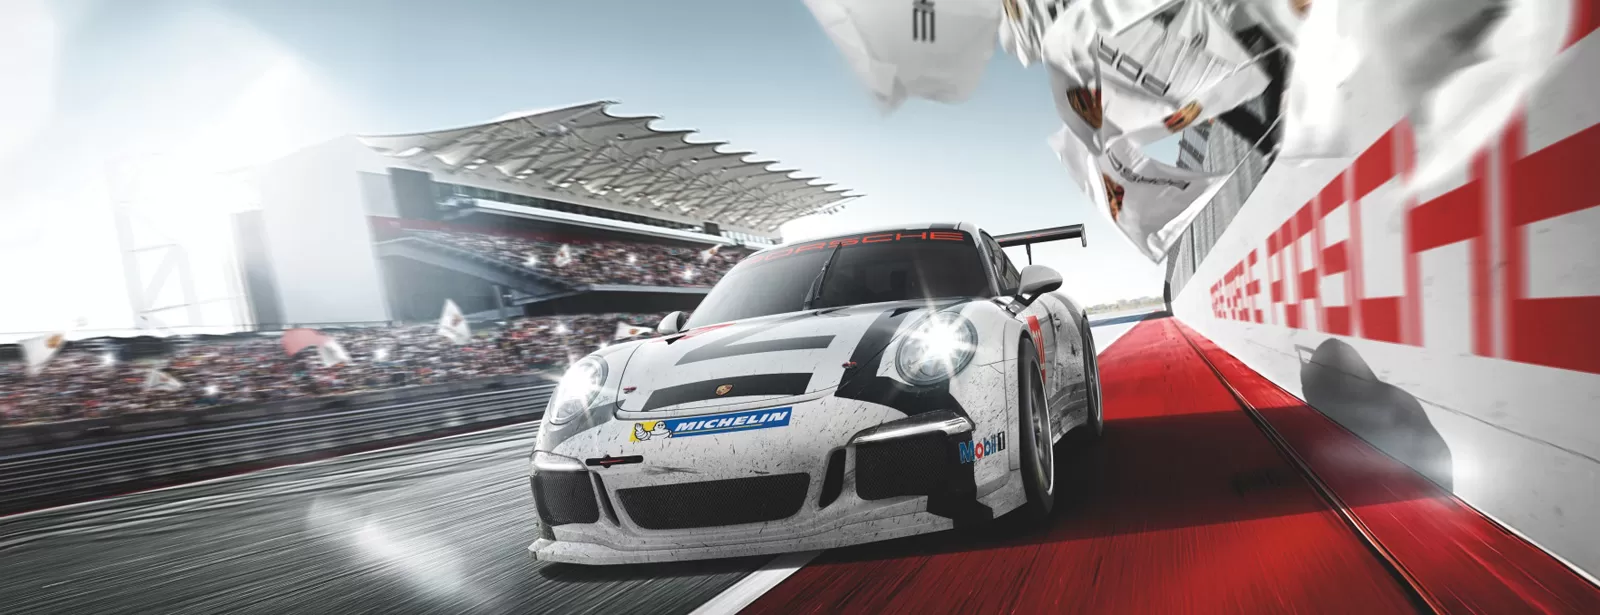 7 этап Porsche Sport Challenge 3 октября 2015 на Moscow Raceway 